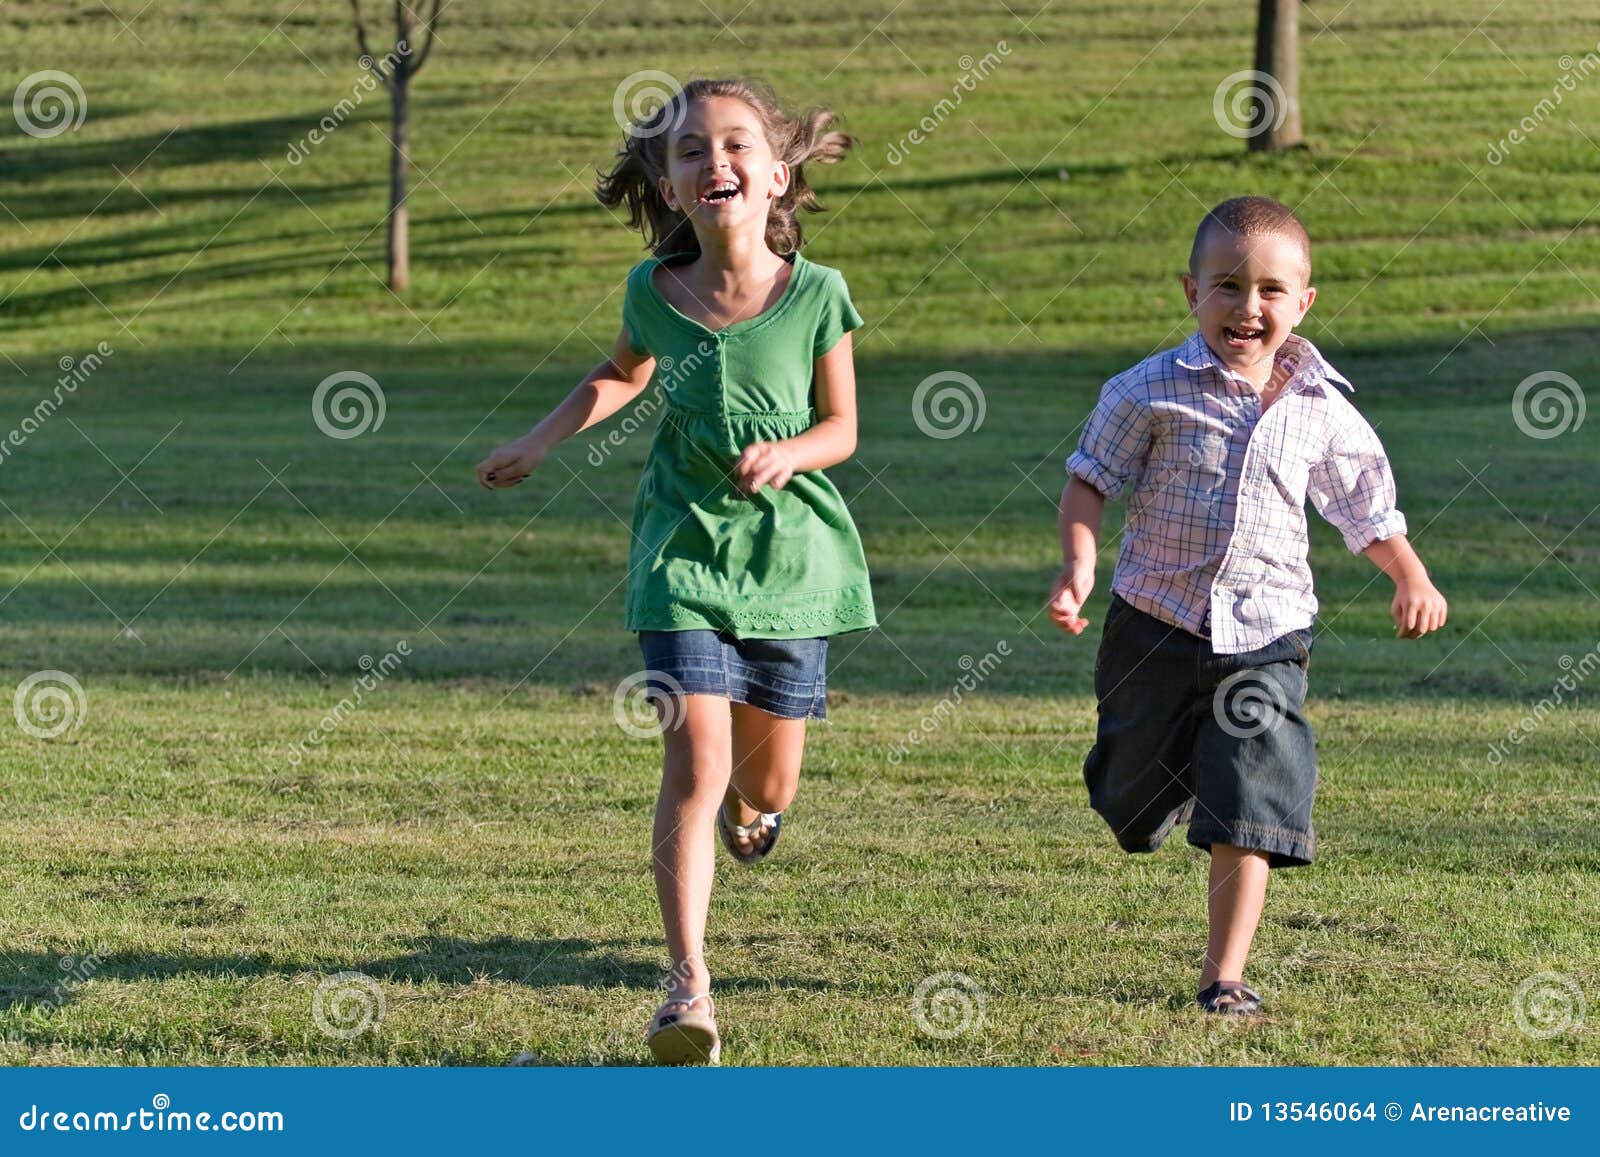 two-kids-running-13546064.jpg